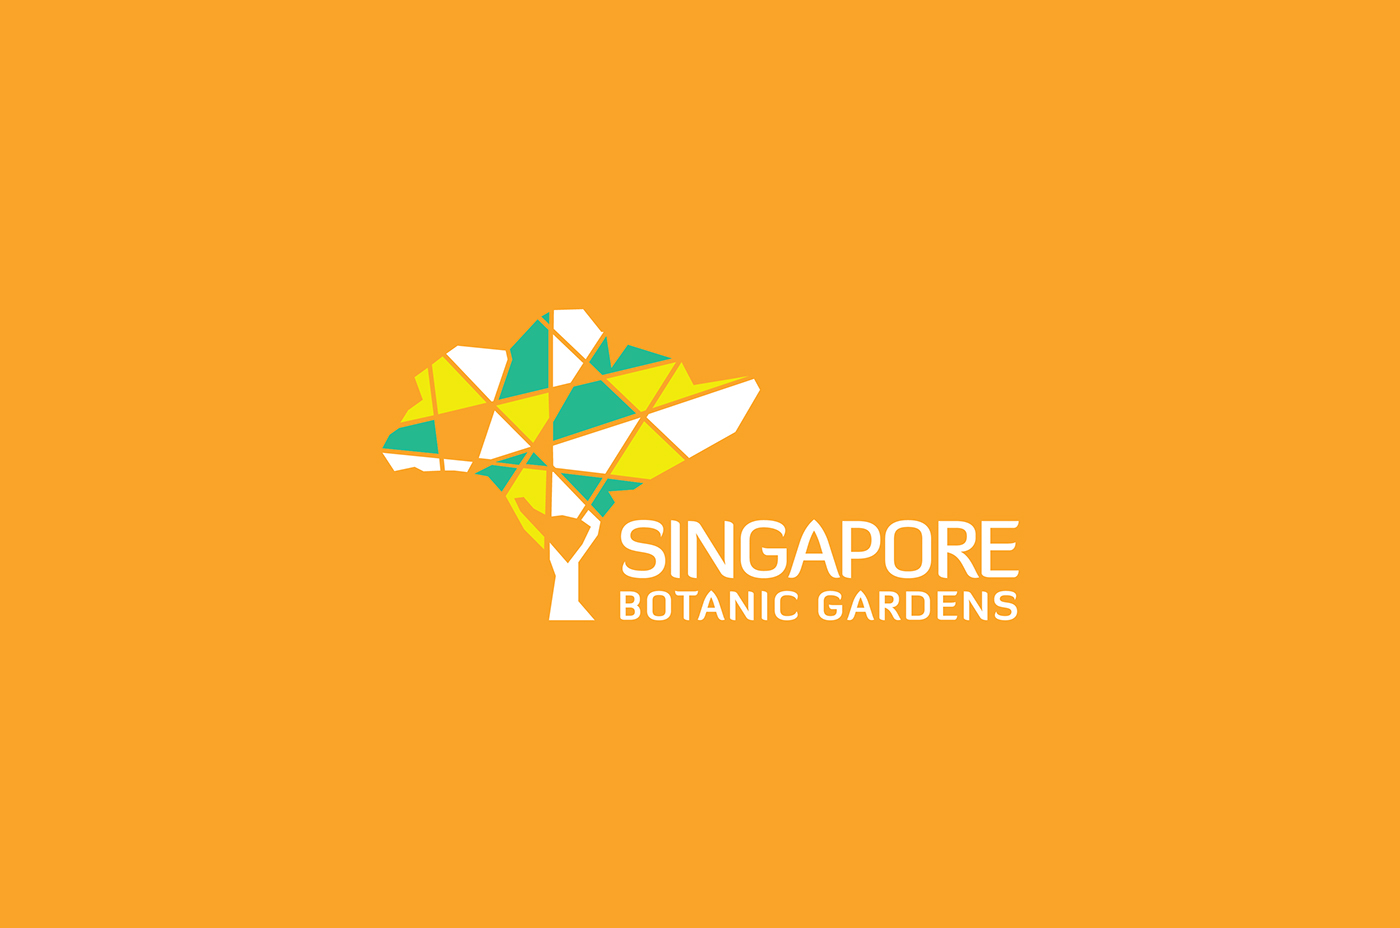 Singapore Botanic Gardens Corporate Identity (Concept) on Behance